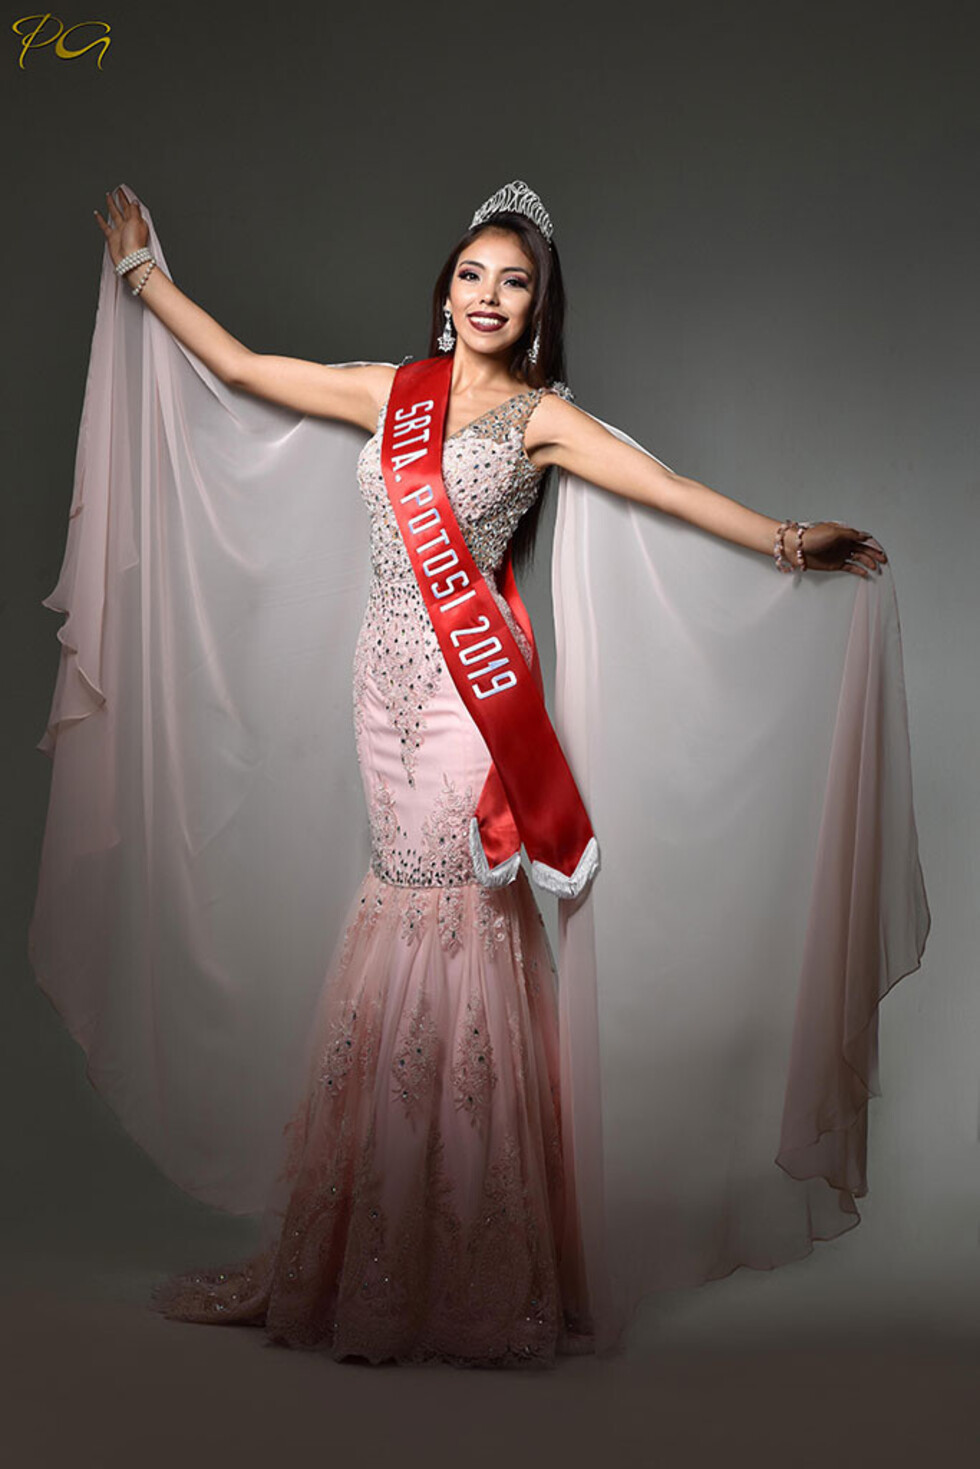 Jhoselyn Mariscal es Potosí en el Miss Bolivia